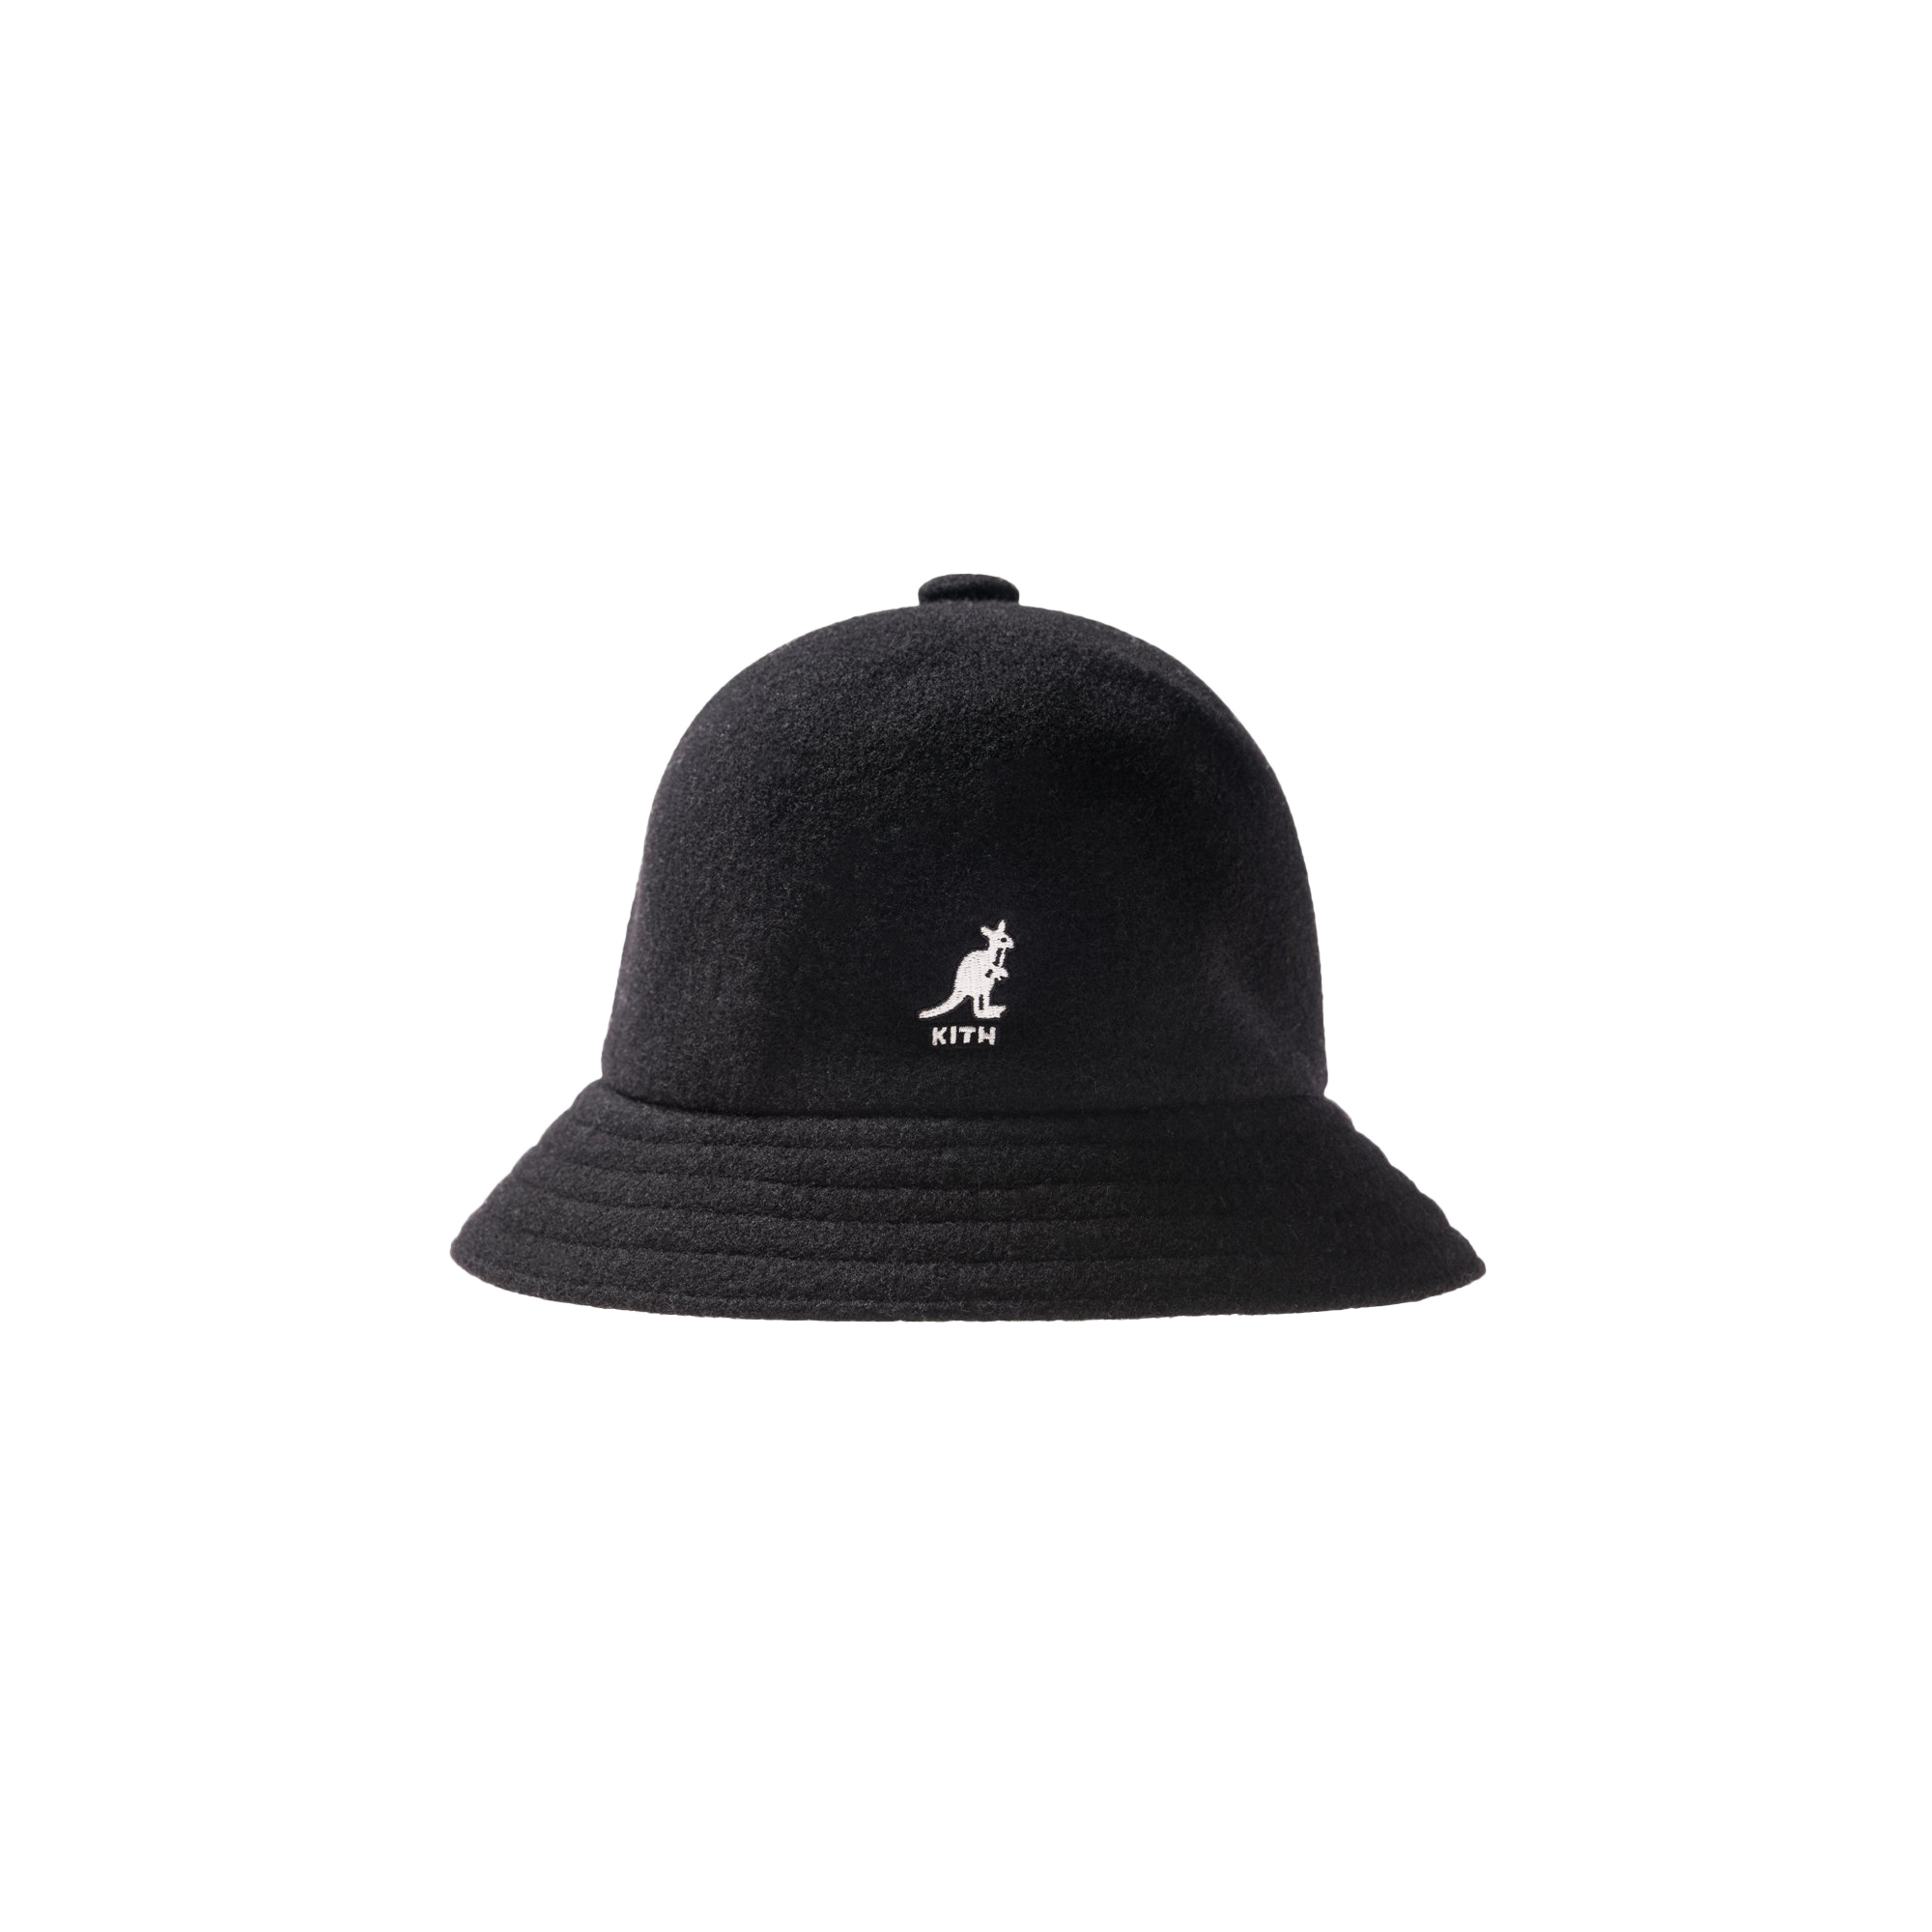 Kith x Kangol Wool Casual Bucket Hat Black Men's - FW18 - US